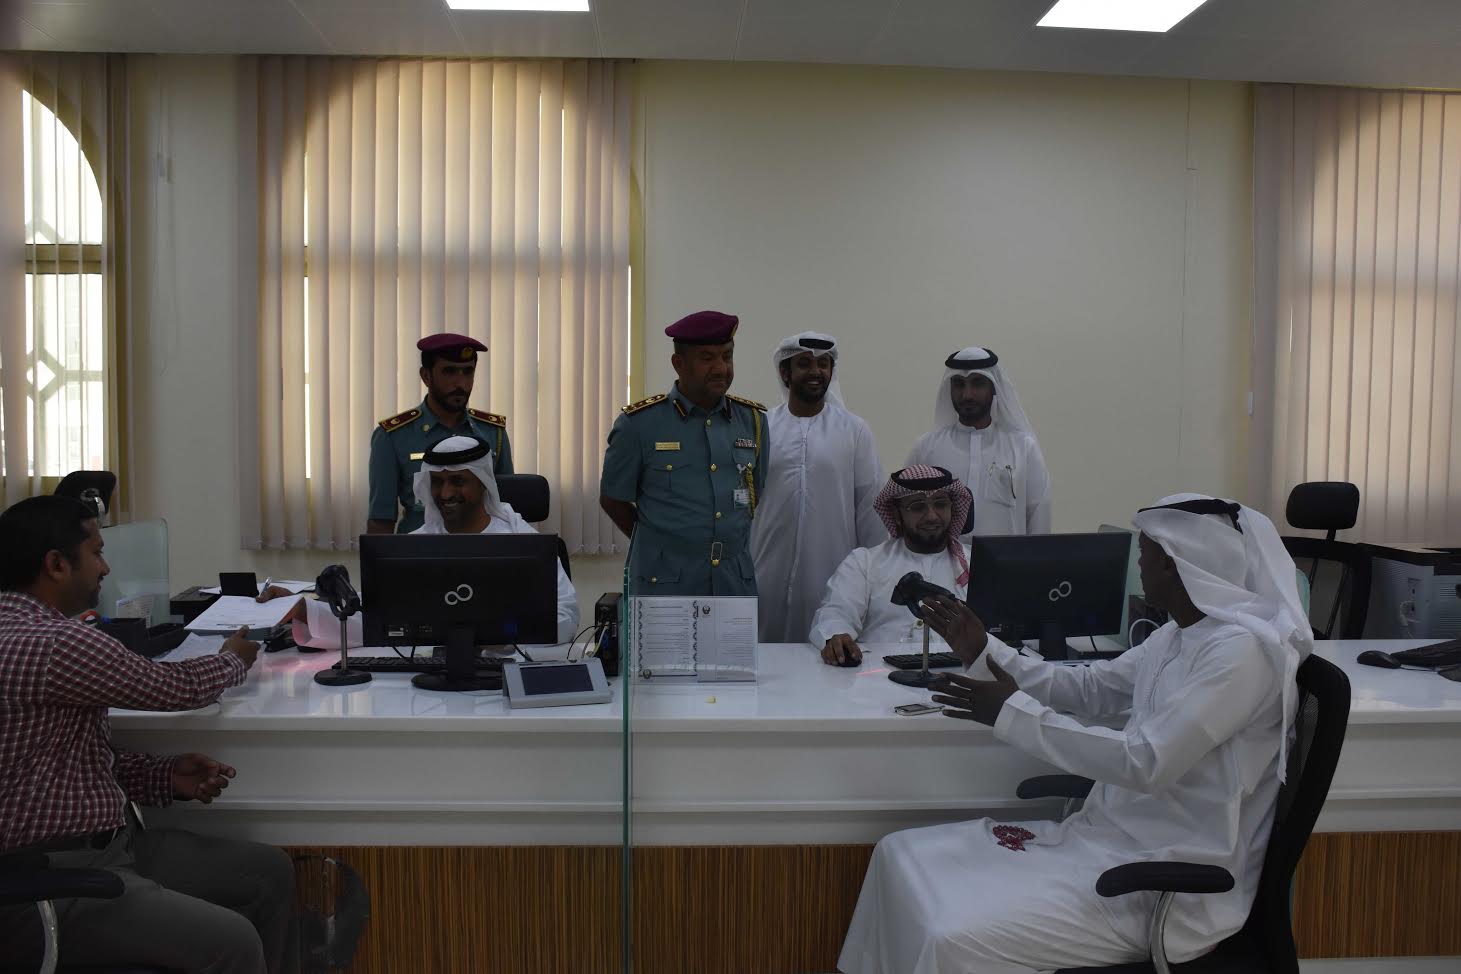 Work at Bani Yas and Khalifa passport cetners inspected  